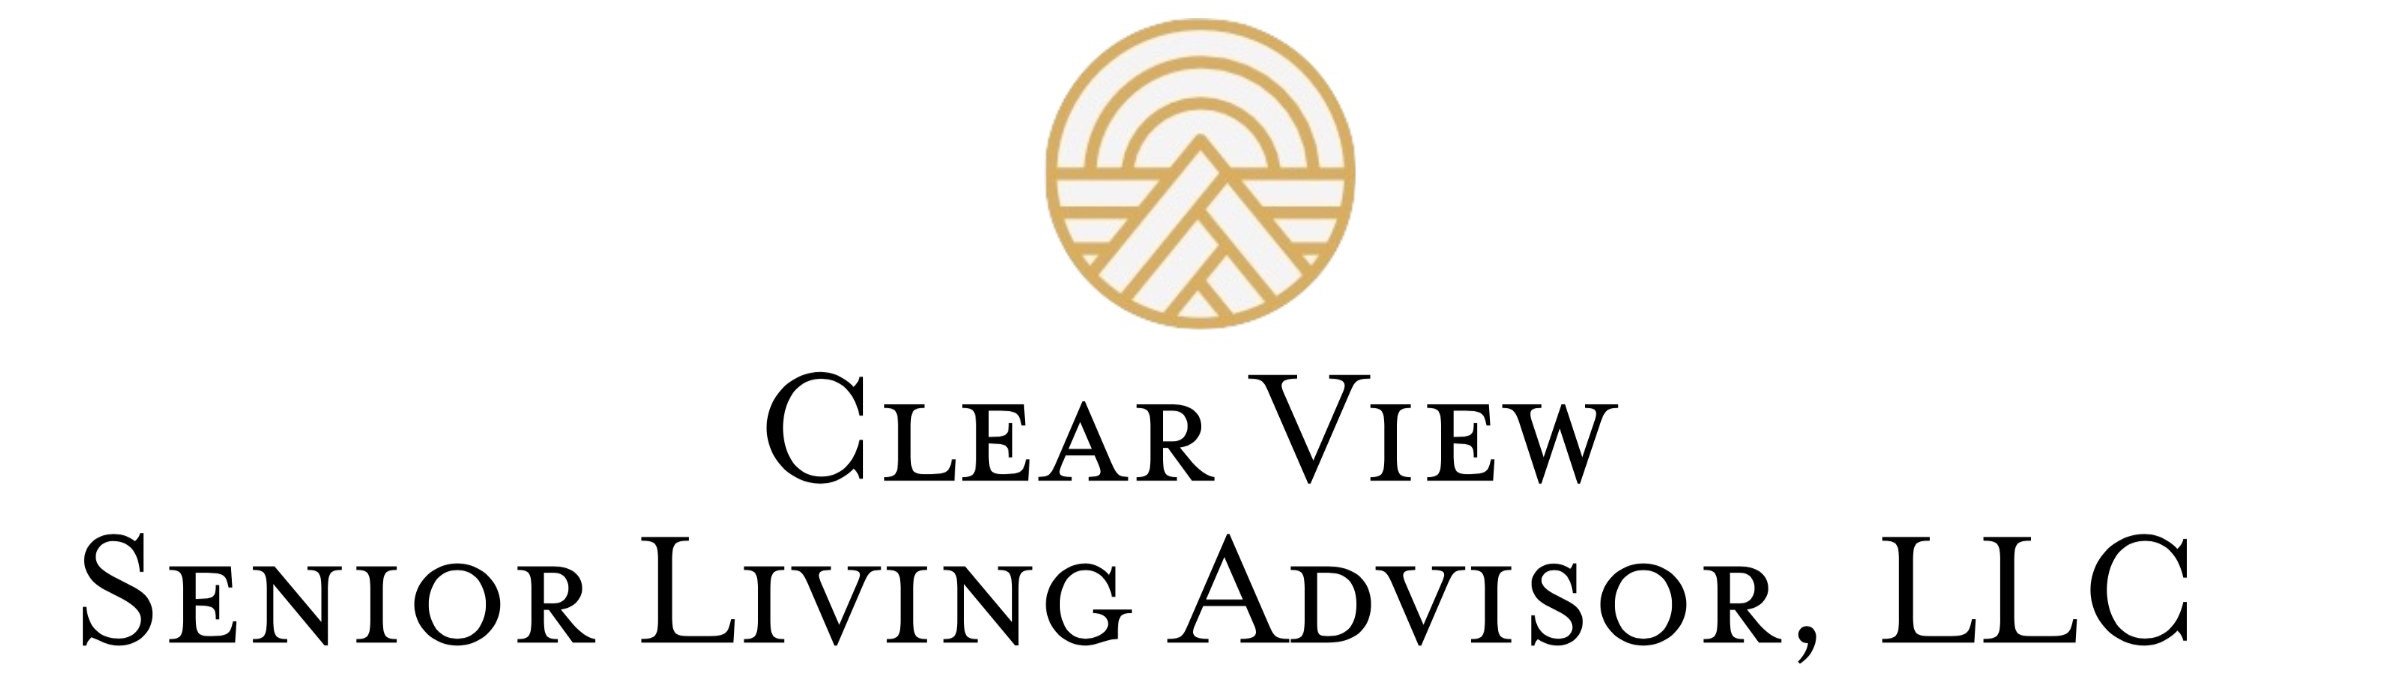 Clear View Senior Living Advisor LLC